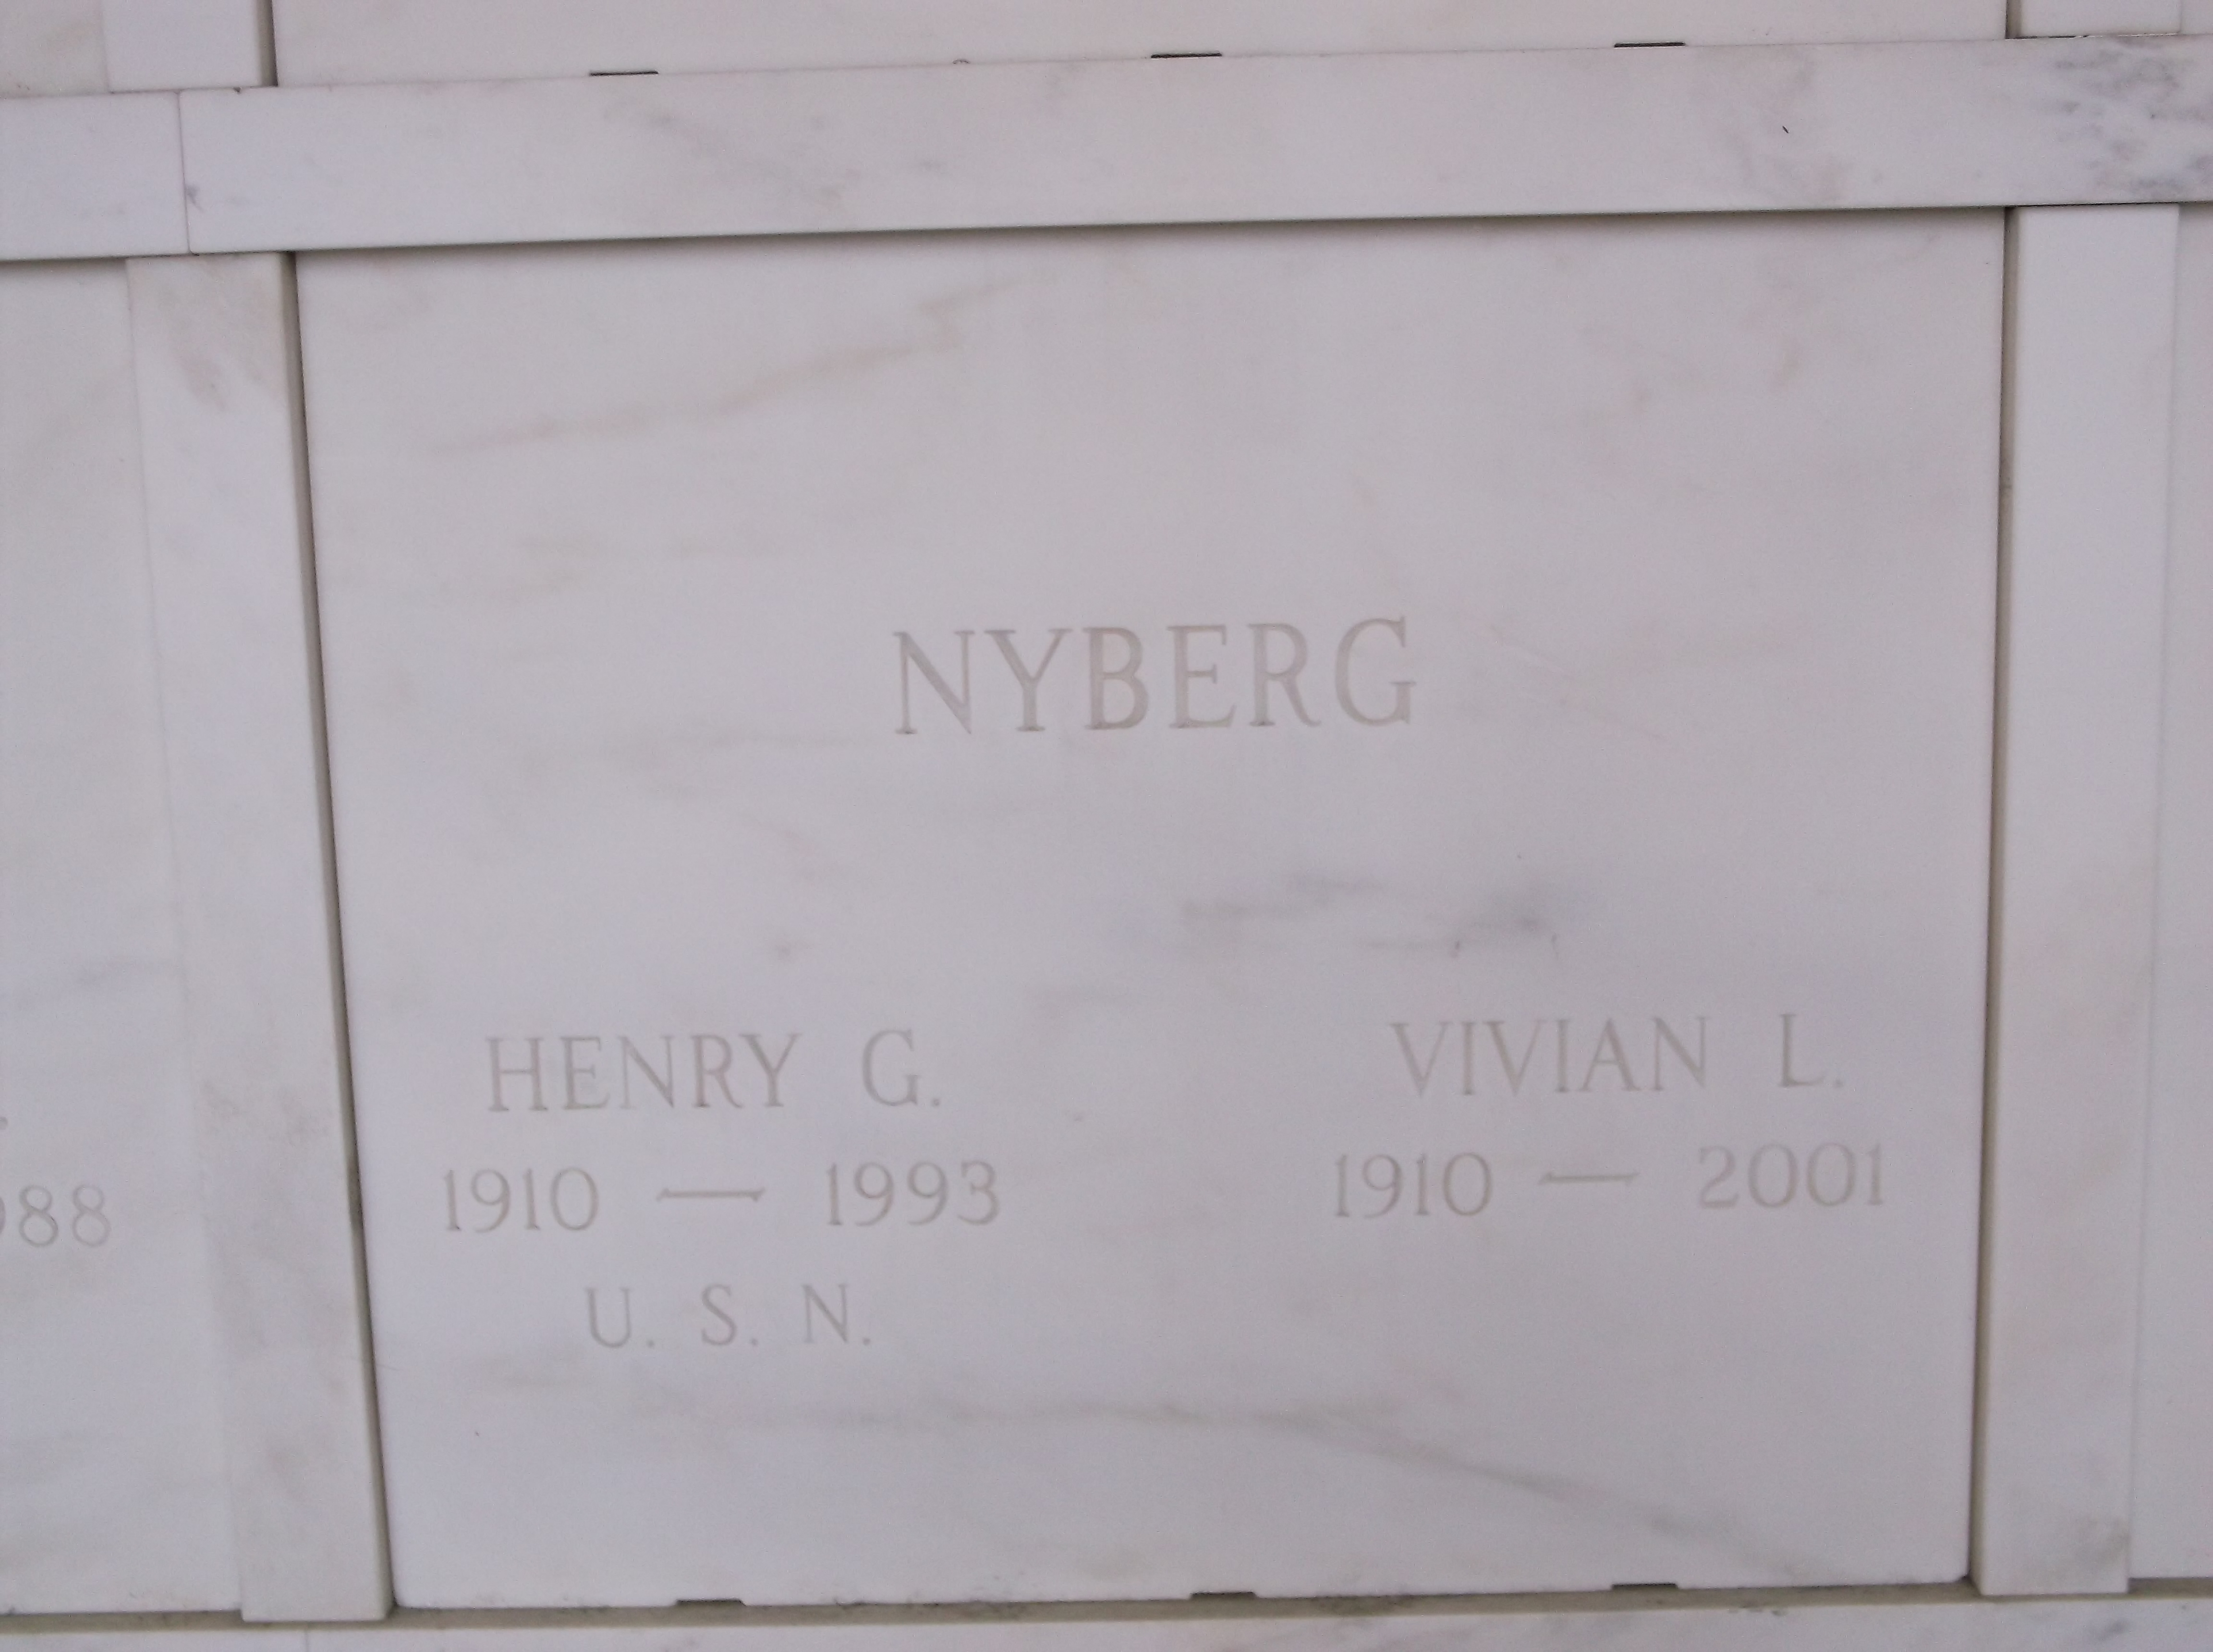 Henry G Nyberg